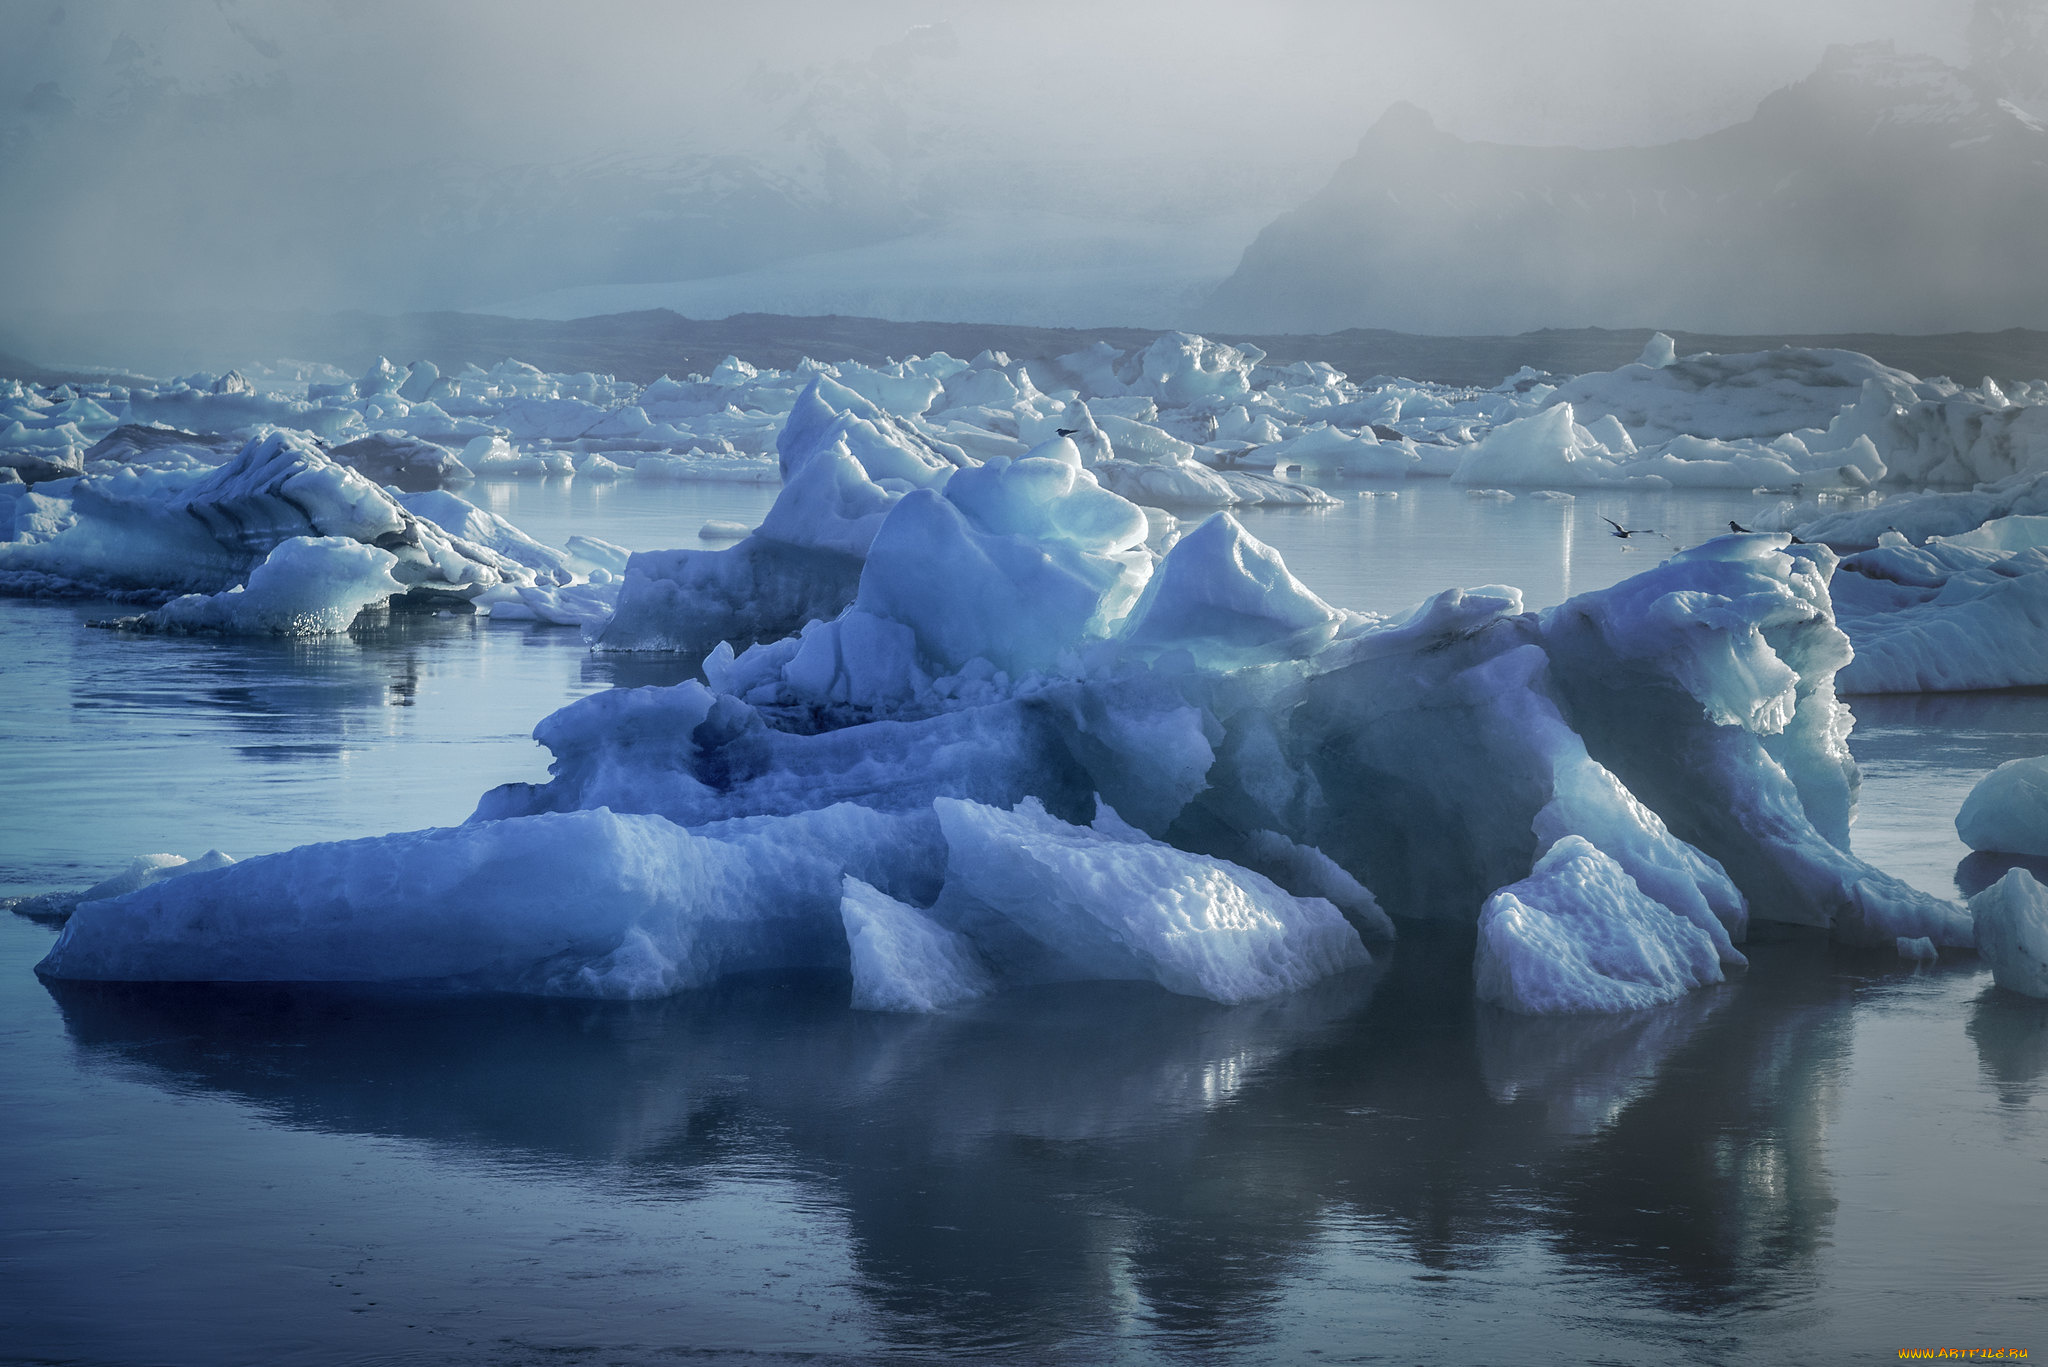 Про ледовитый океан. Антарктида Гренландия Арктика Северный Ледовитый океан. Ледники Атлантического океана. Айсберг в тихом океане. Южный океан плавучие льды.